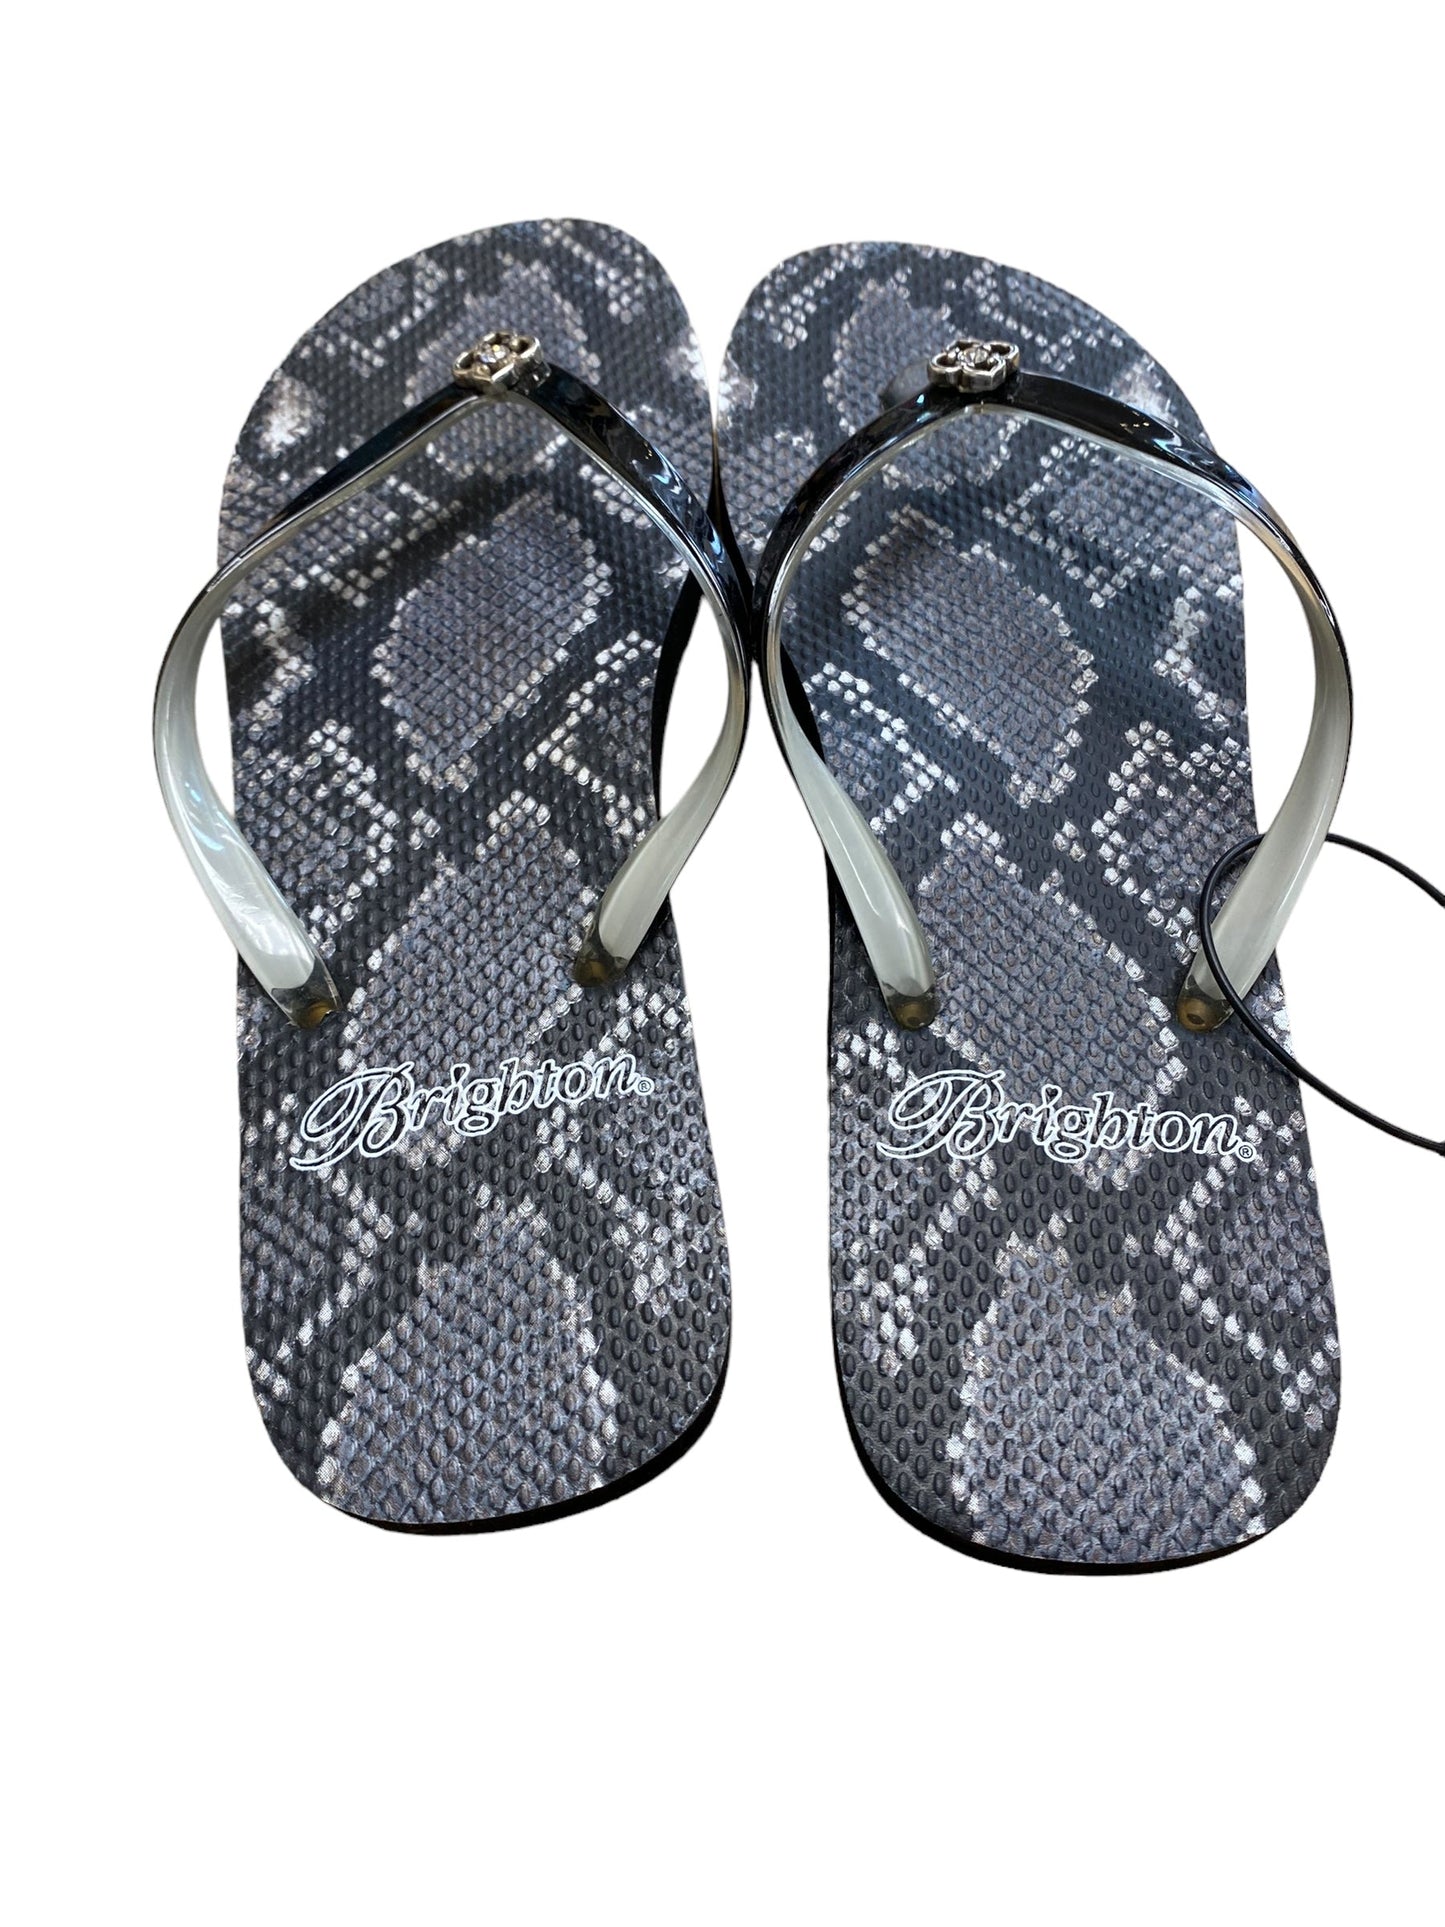 Snakeskin Print Sandals Flip Flops Brighton, Size 10